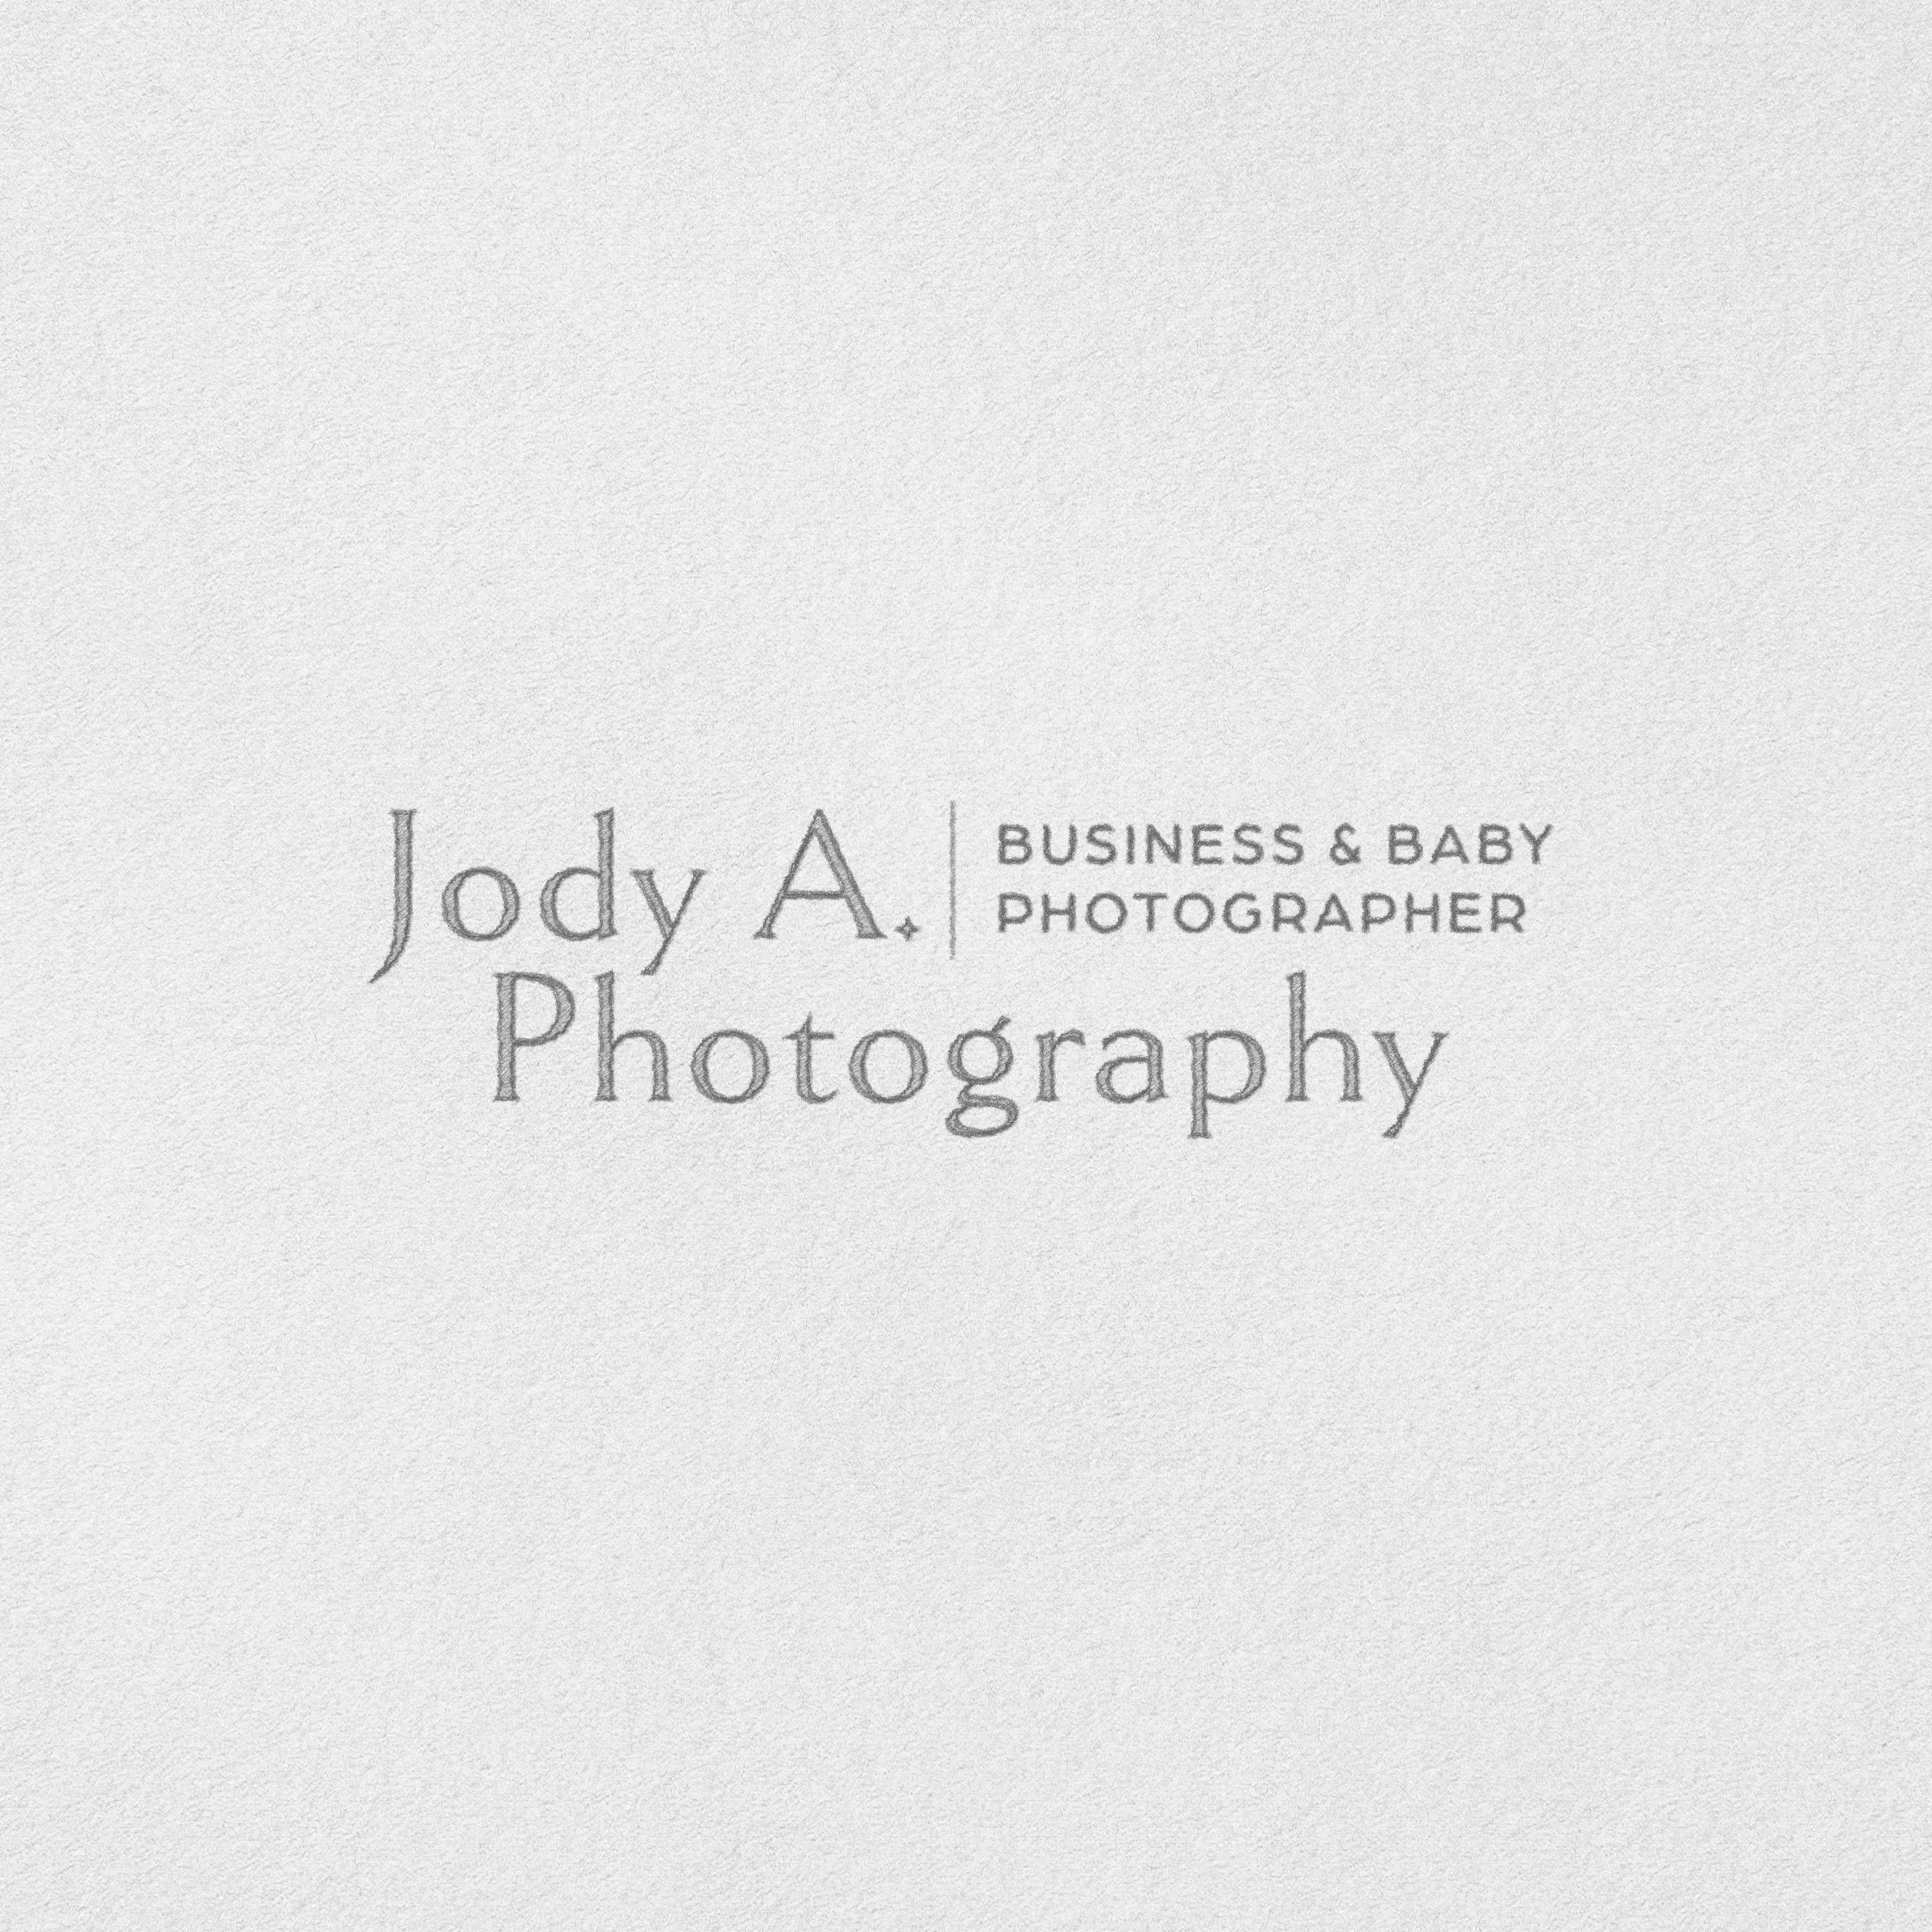 Jody A. Photography Logo Mockup.jpeg